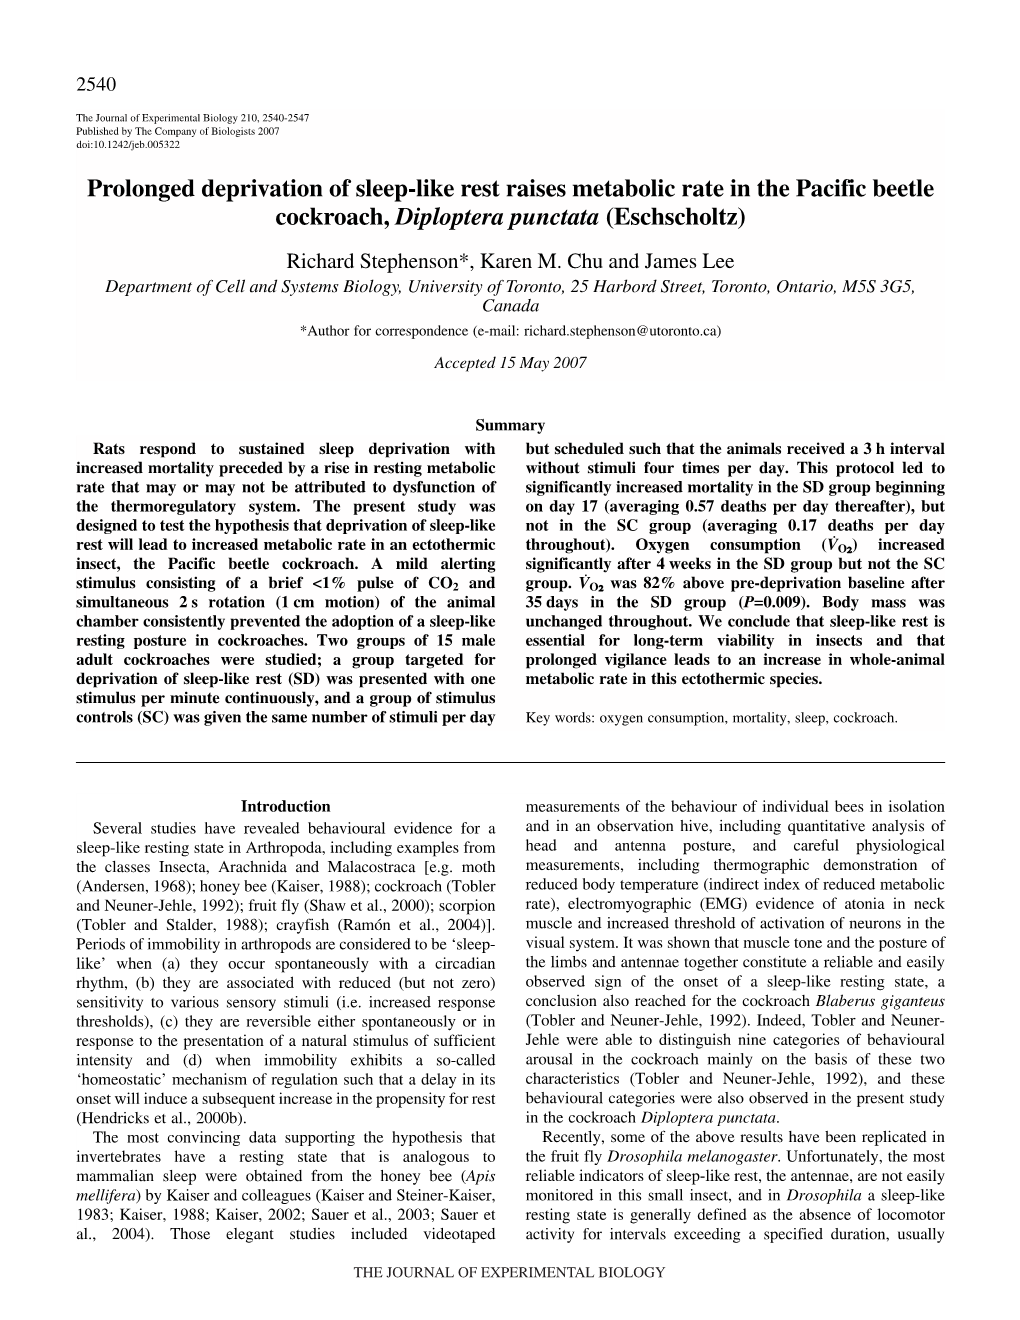 Prolonged Deprivation of Sleep-Like Rest Raises Metabolic Rate in the Pacific Beetle Cockroach, Diploptera Punctata (Eschscholtz) Richard Stephenson*, Karen M